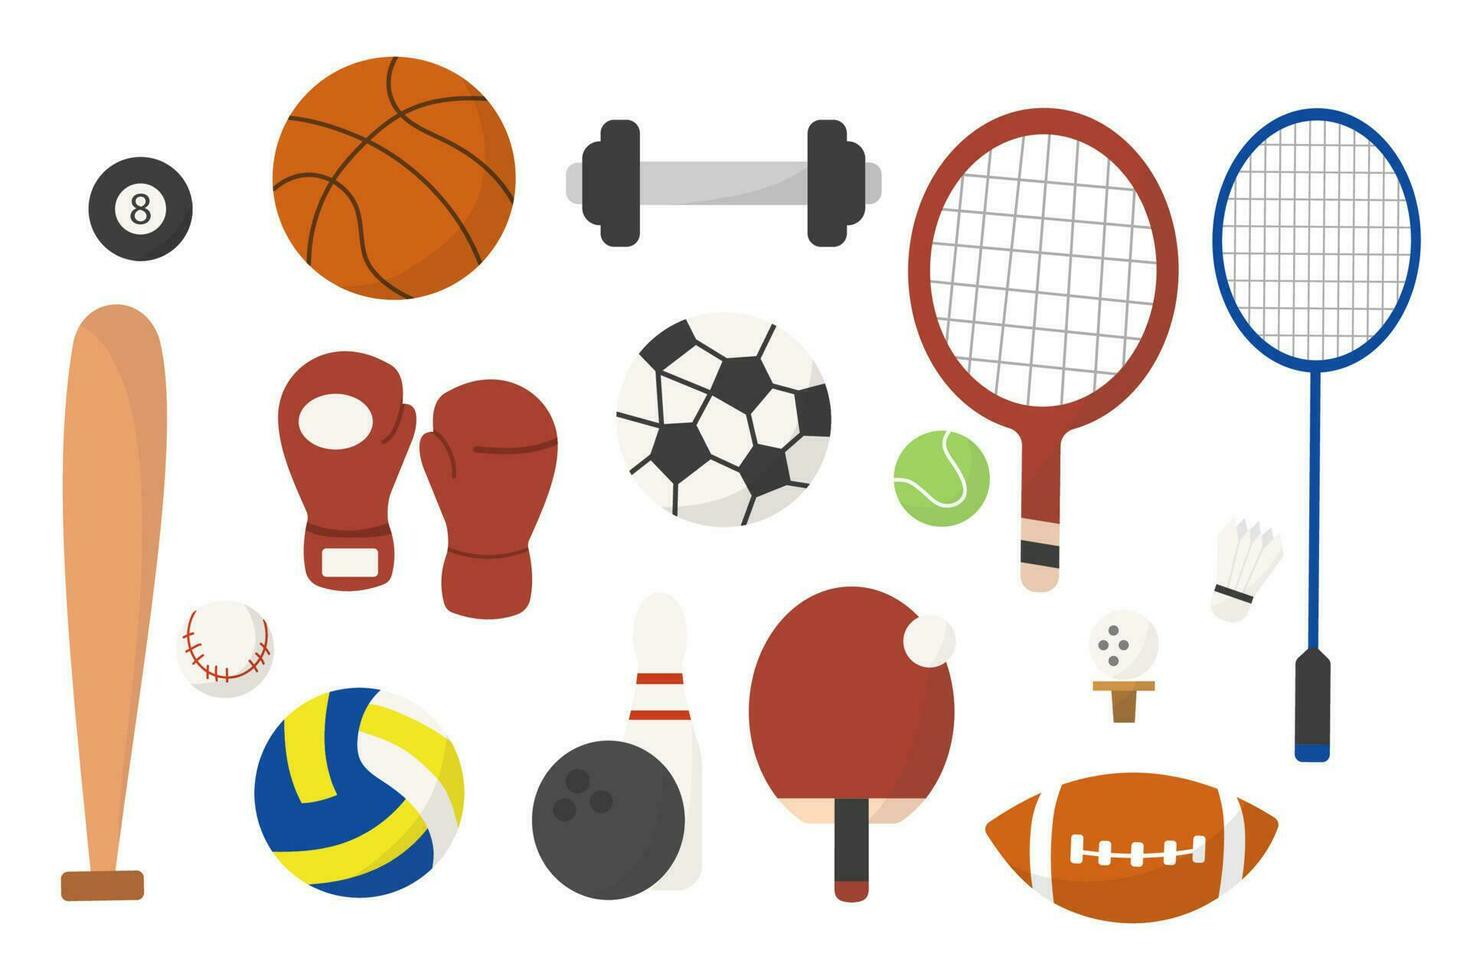 Sports equipment cartoon illustration. Vector hand drawn elements sports games equipment.